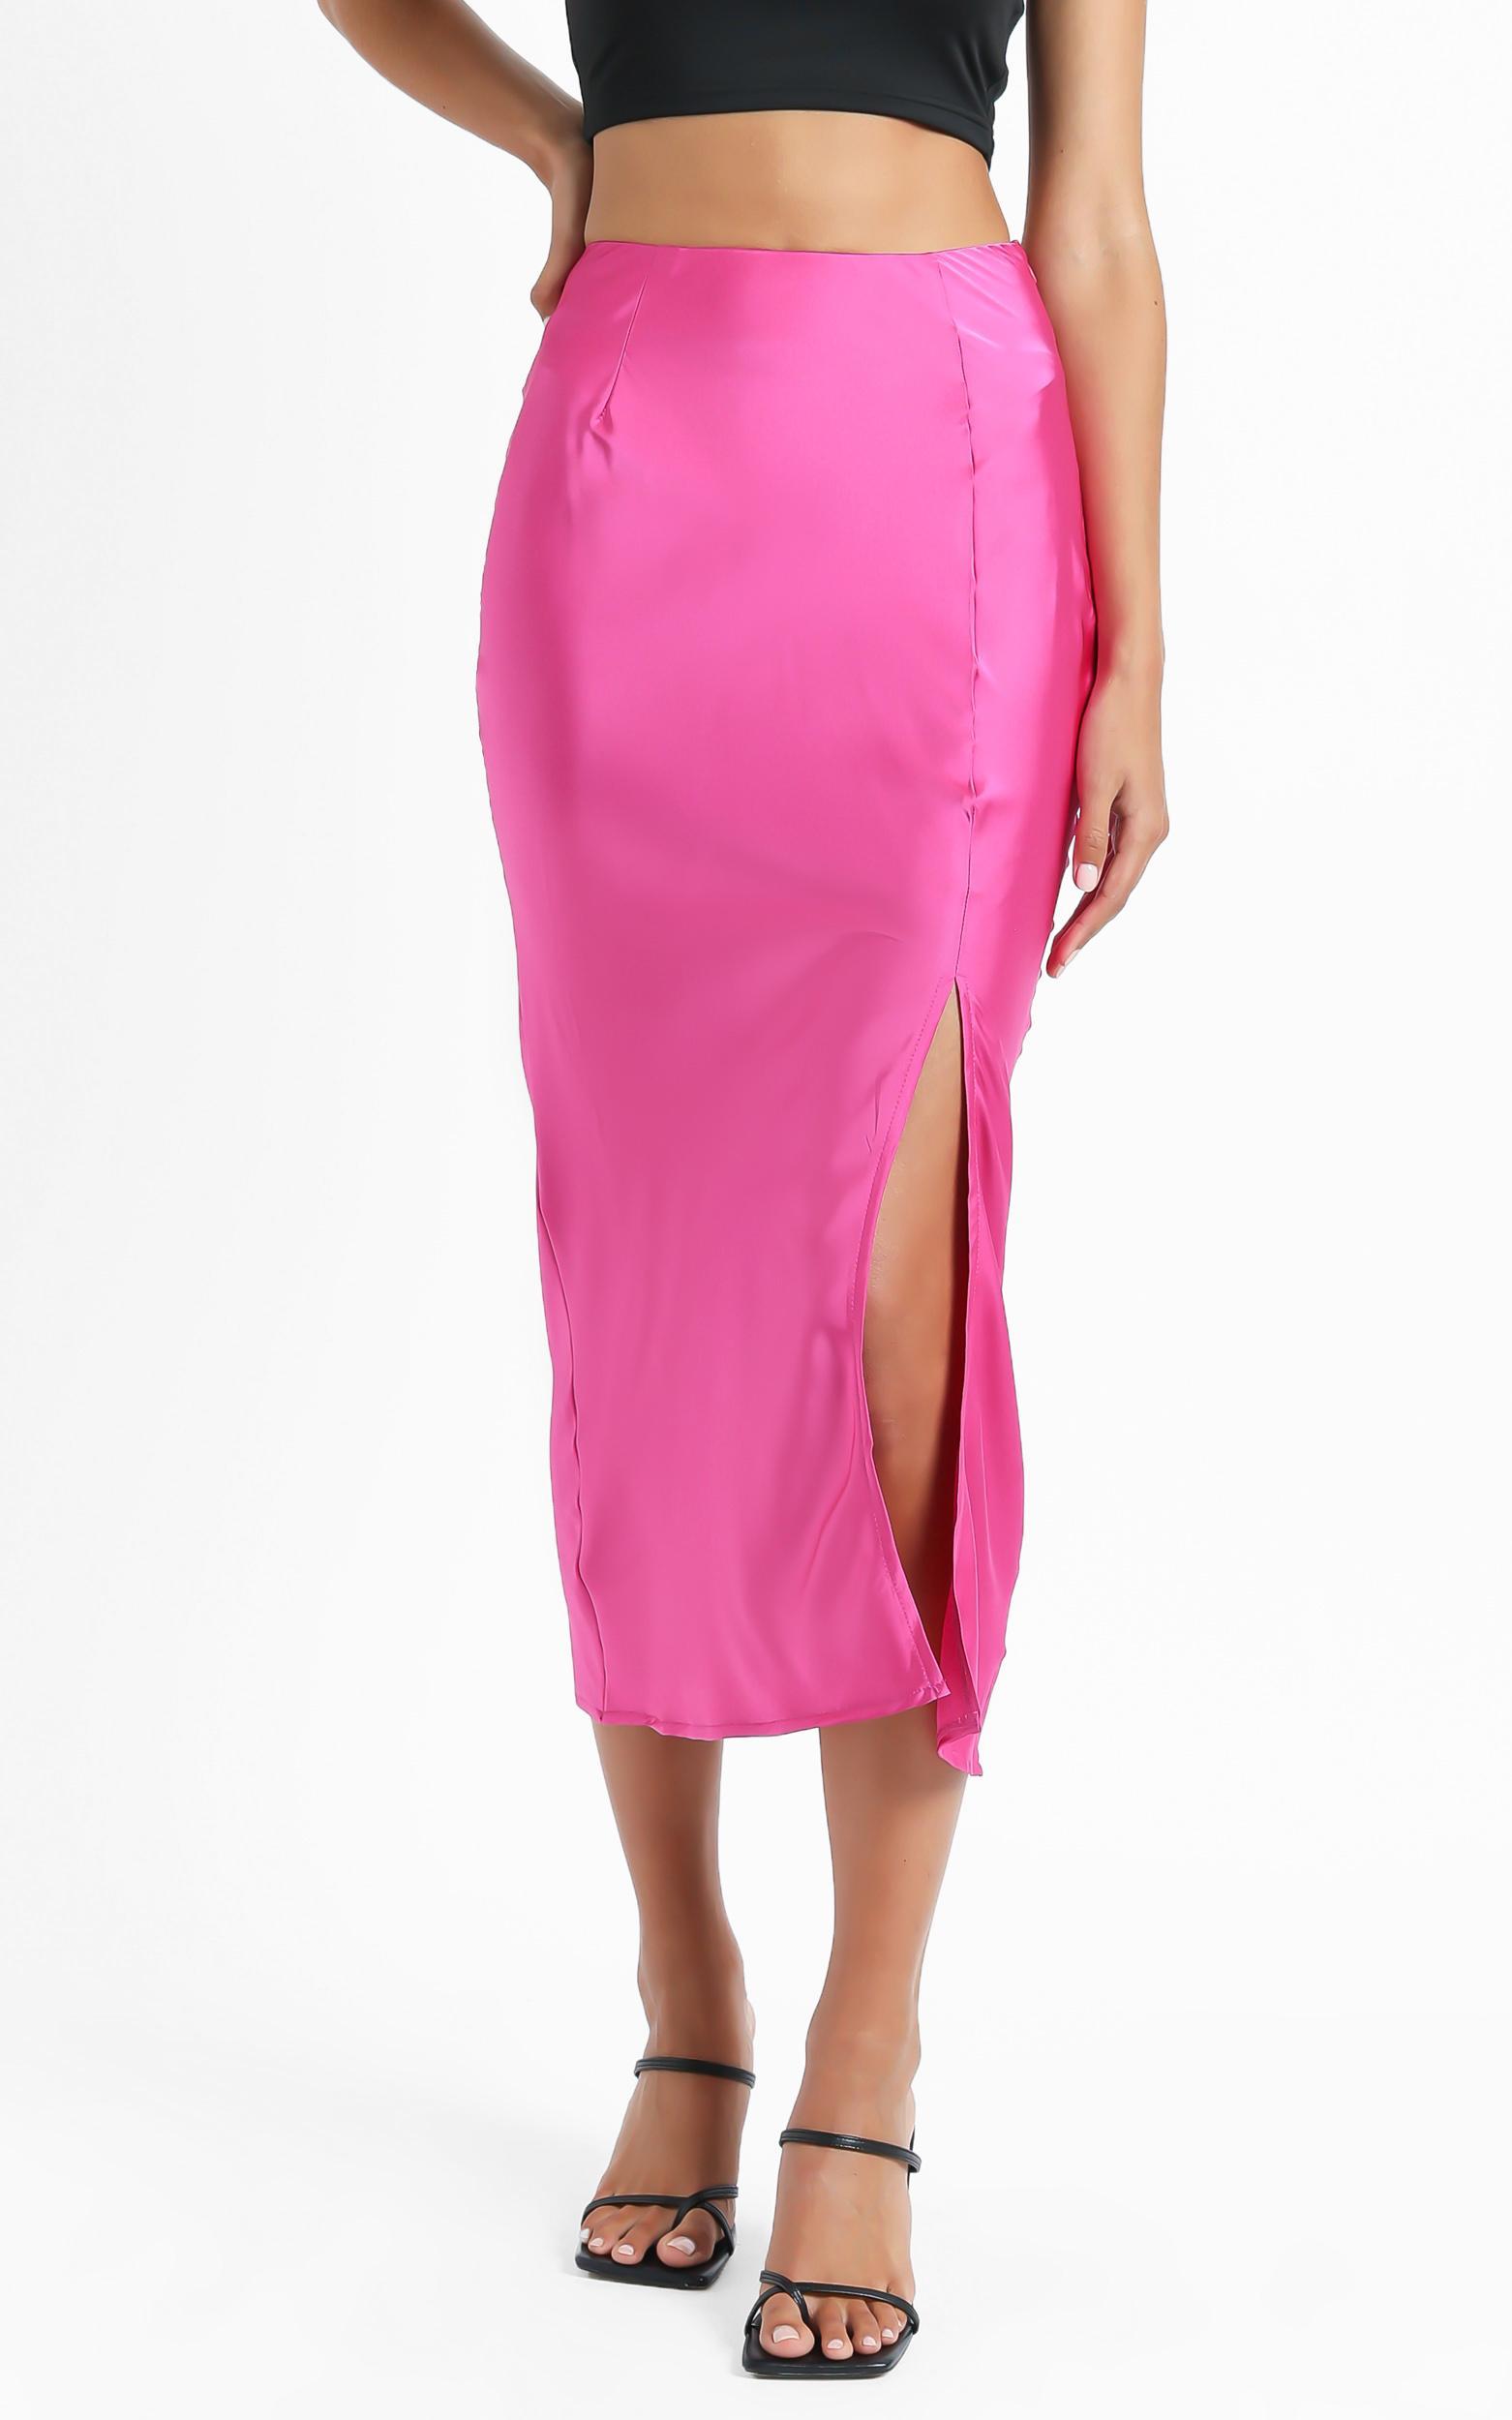 Diara Skirt in Pink - 06, PNK2, hi-res image number null